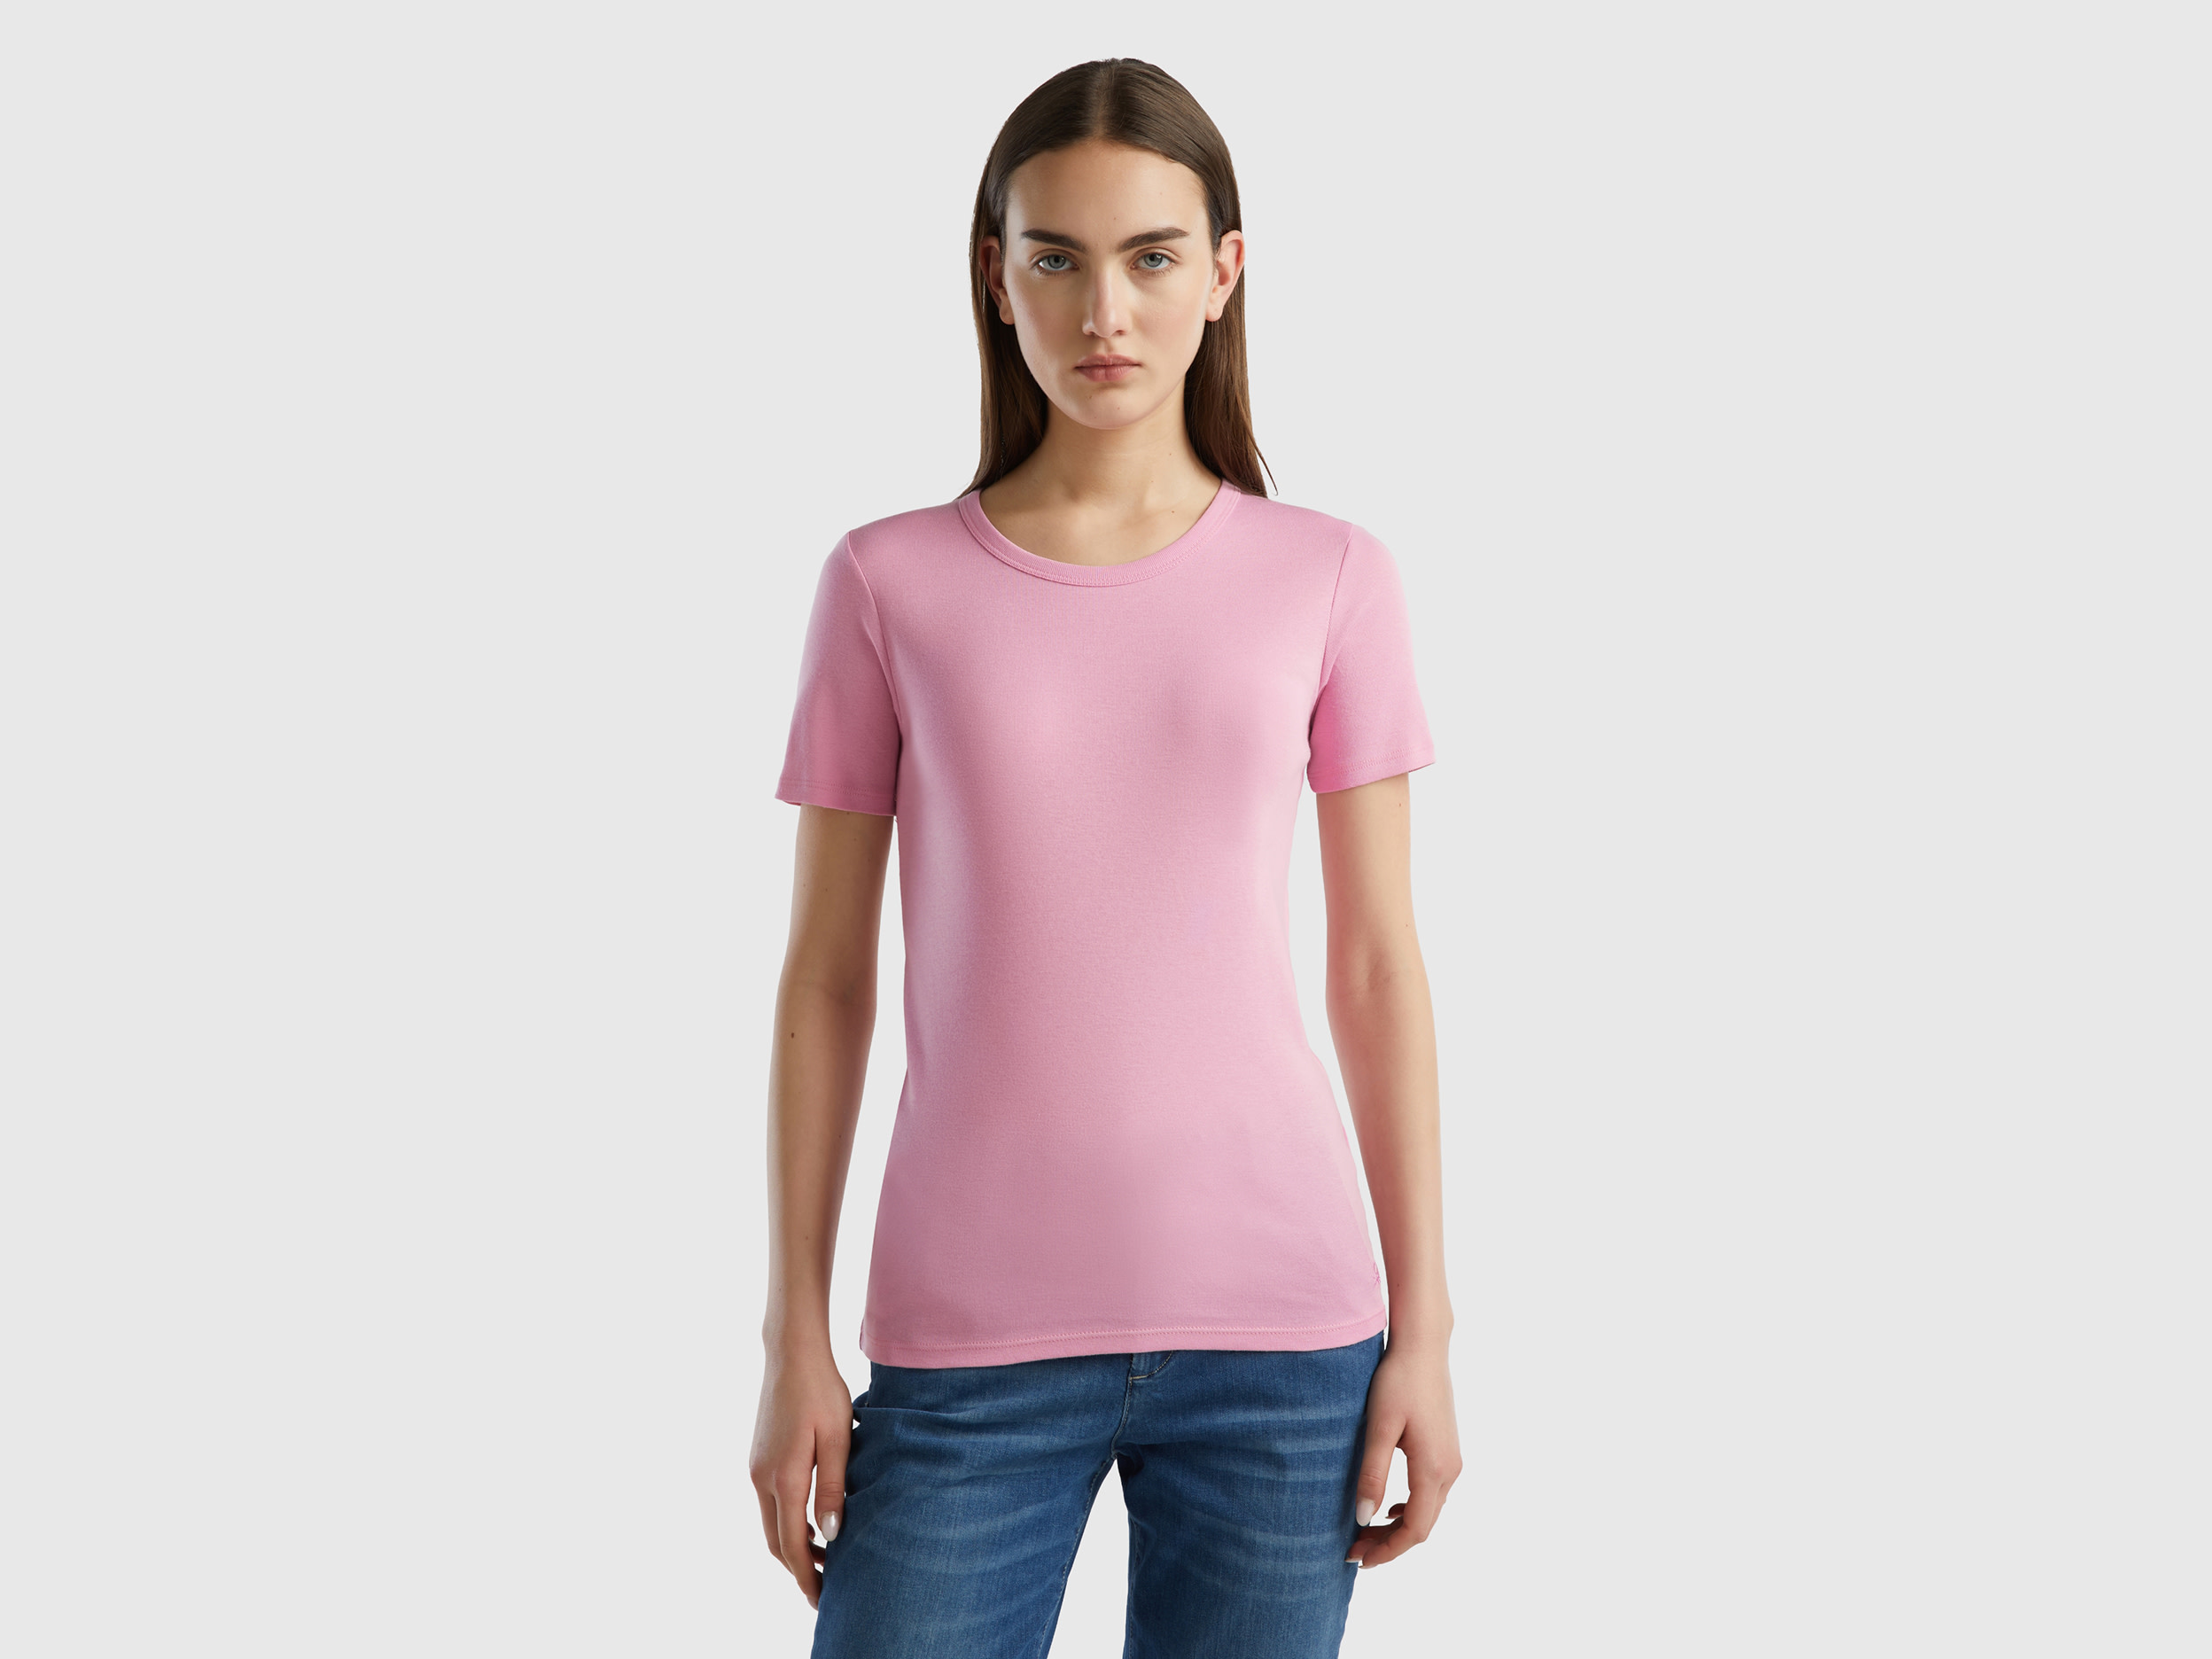 Benetton, Long Fiber Cotton T-shirt, size XXS, Pastel Pink, Women